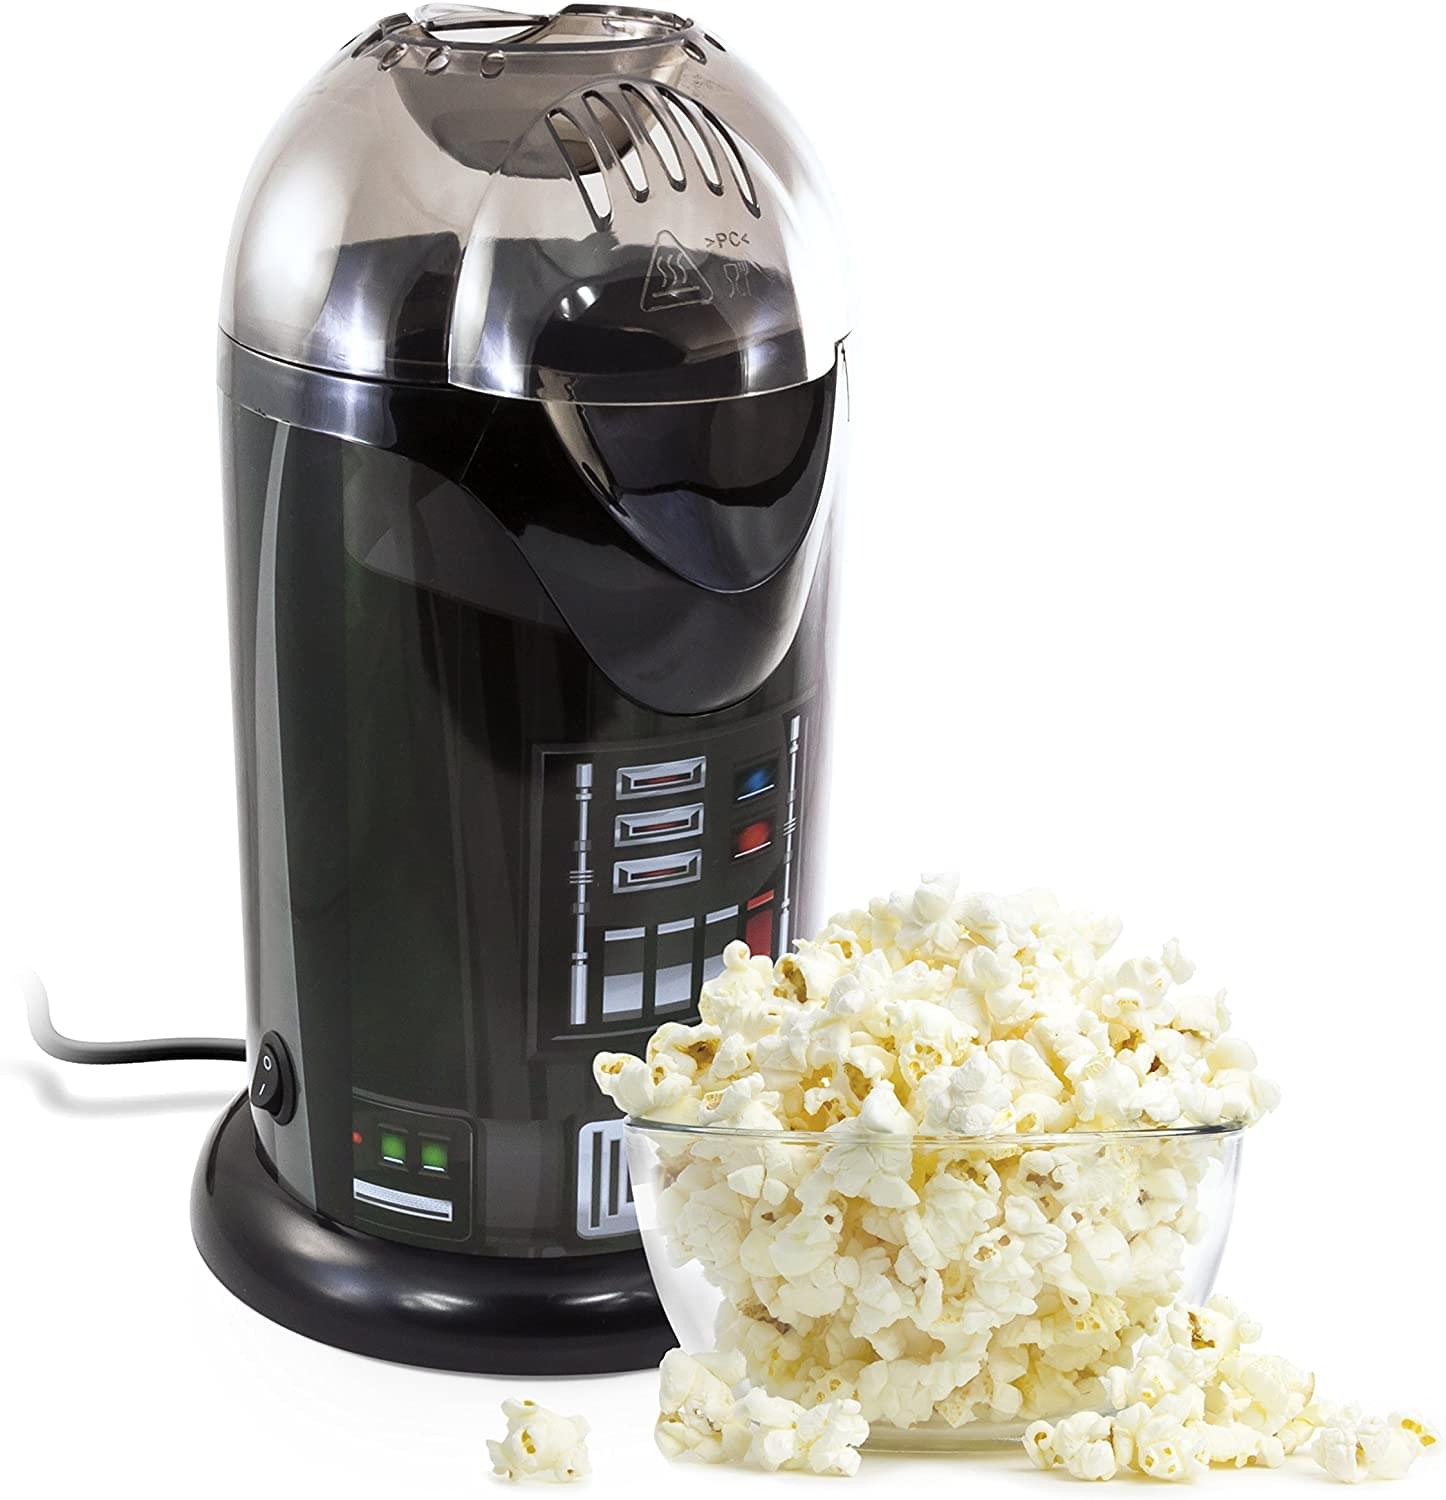 Star Wars R2-D2 Hot Air Popcorn Popper 